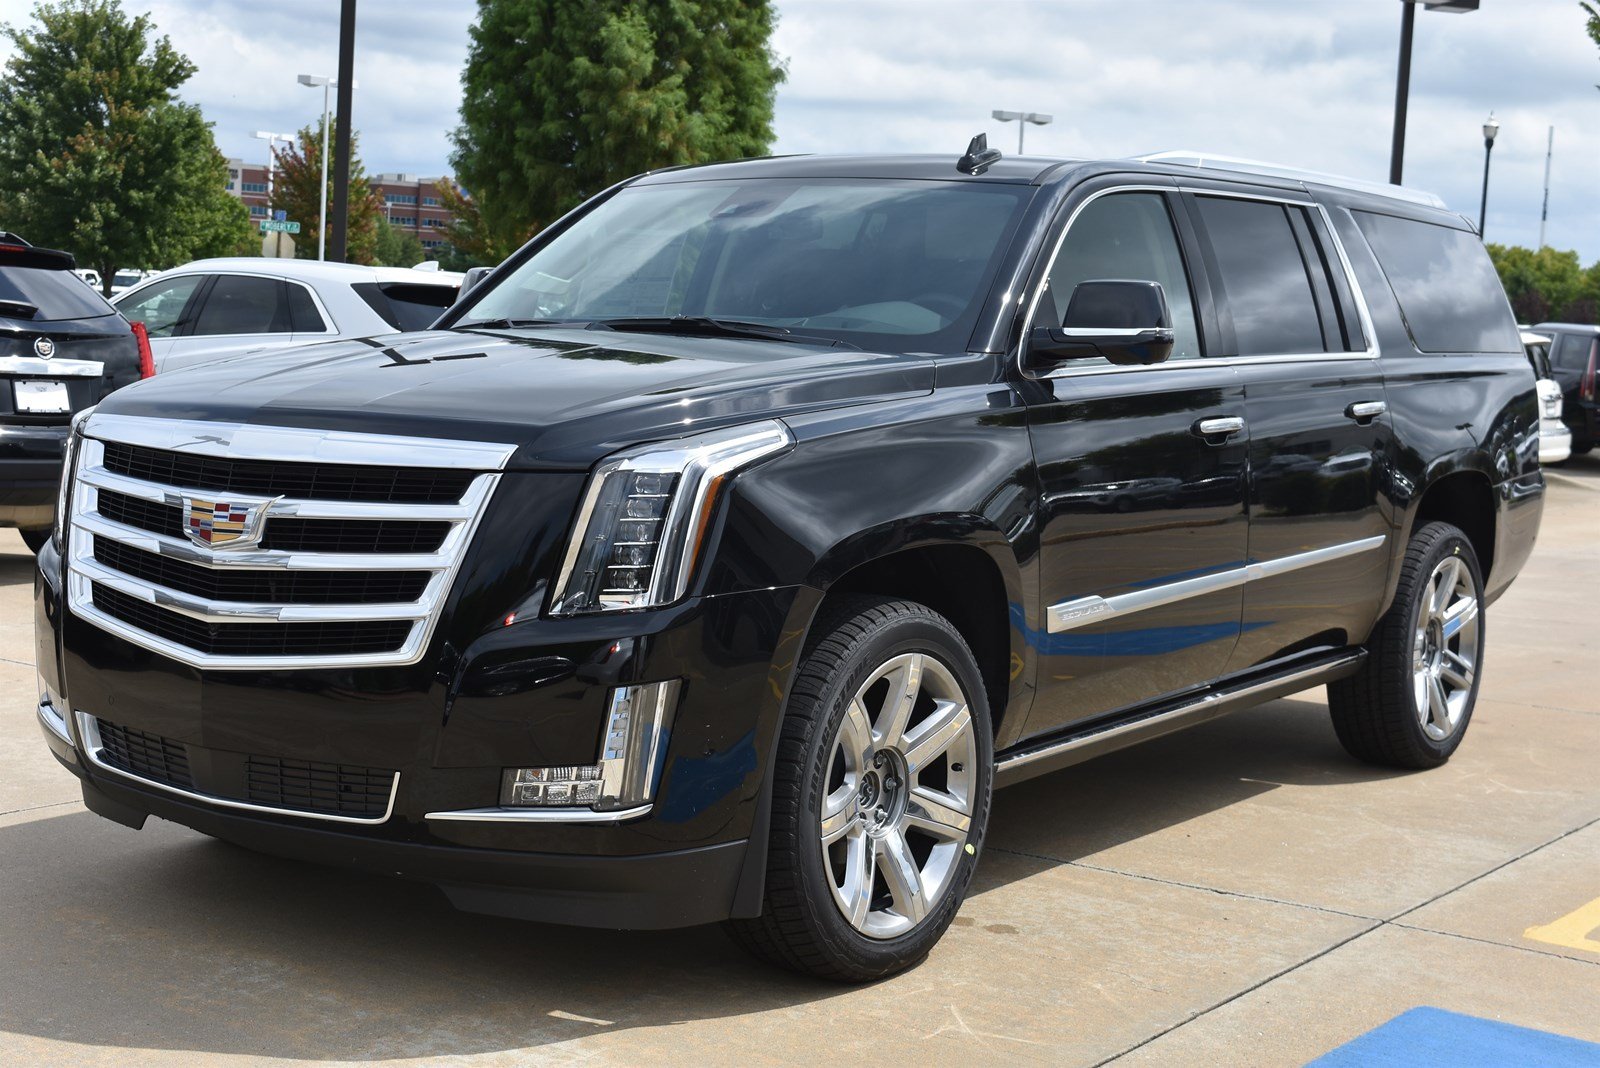 New 2020 Cadillac Escalade Esv Premium Luxury With Navigation 4wd